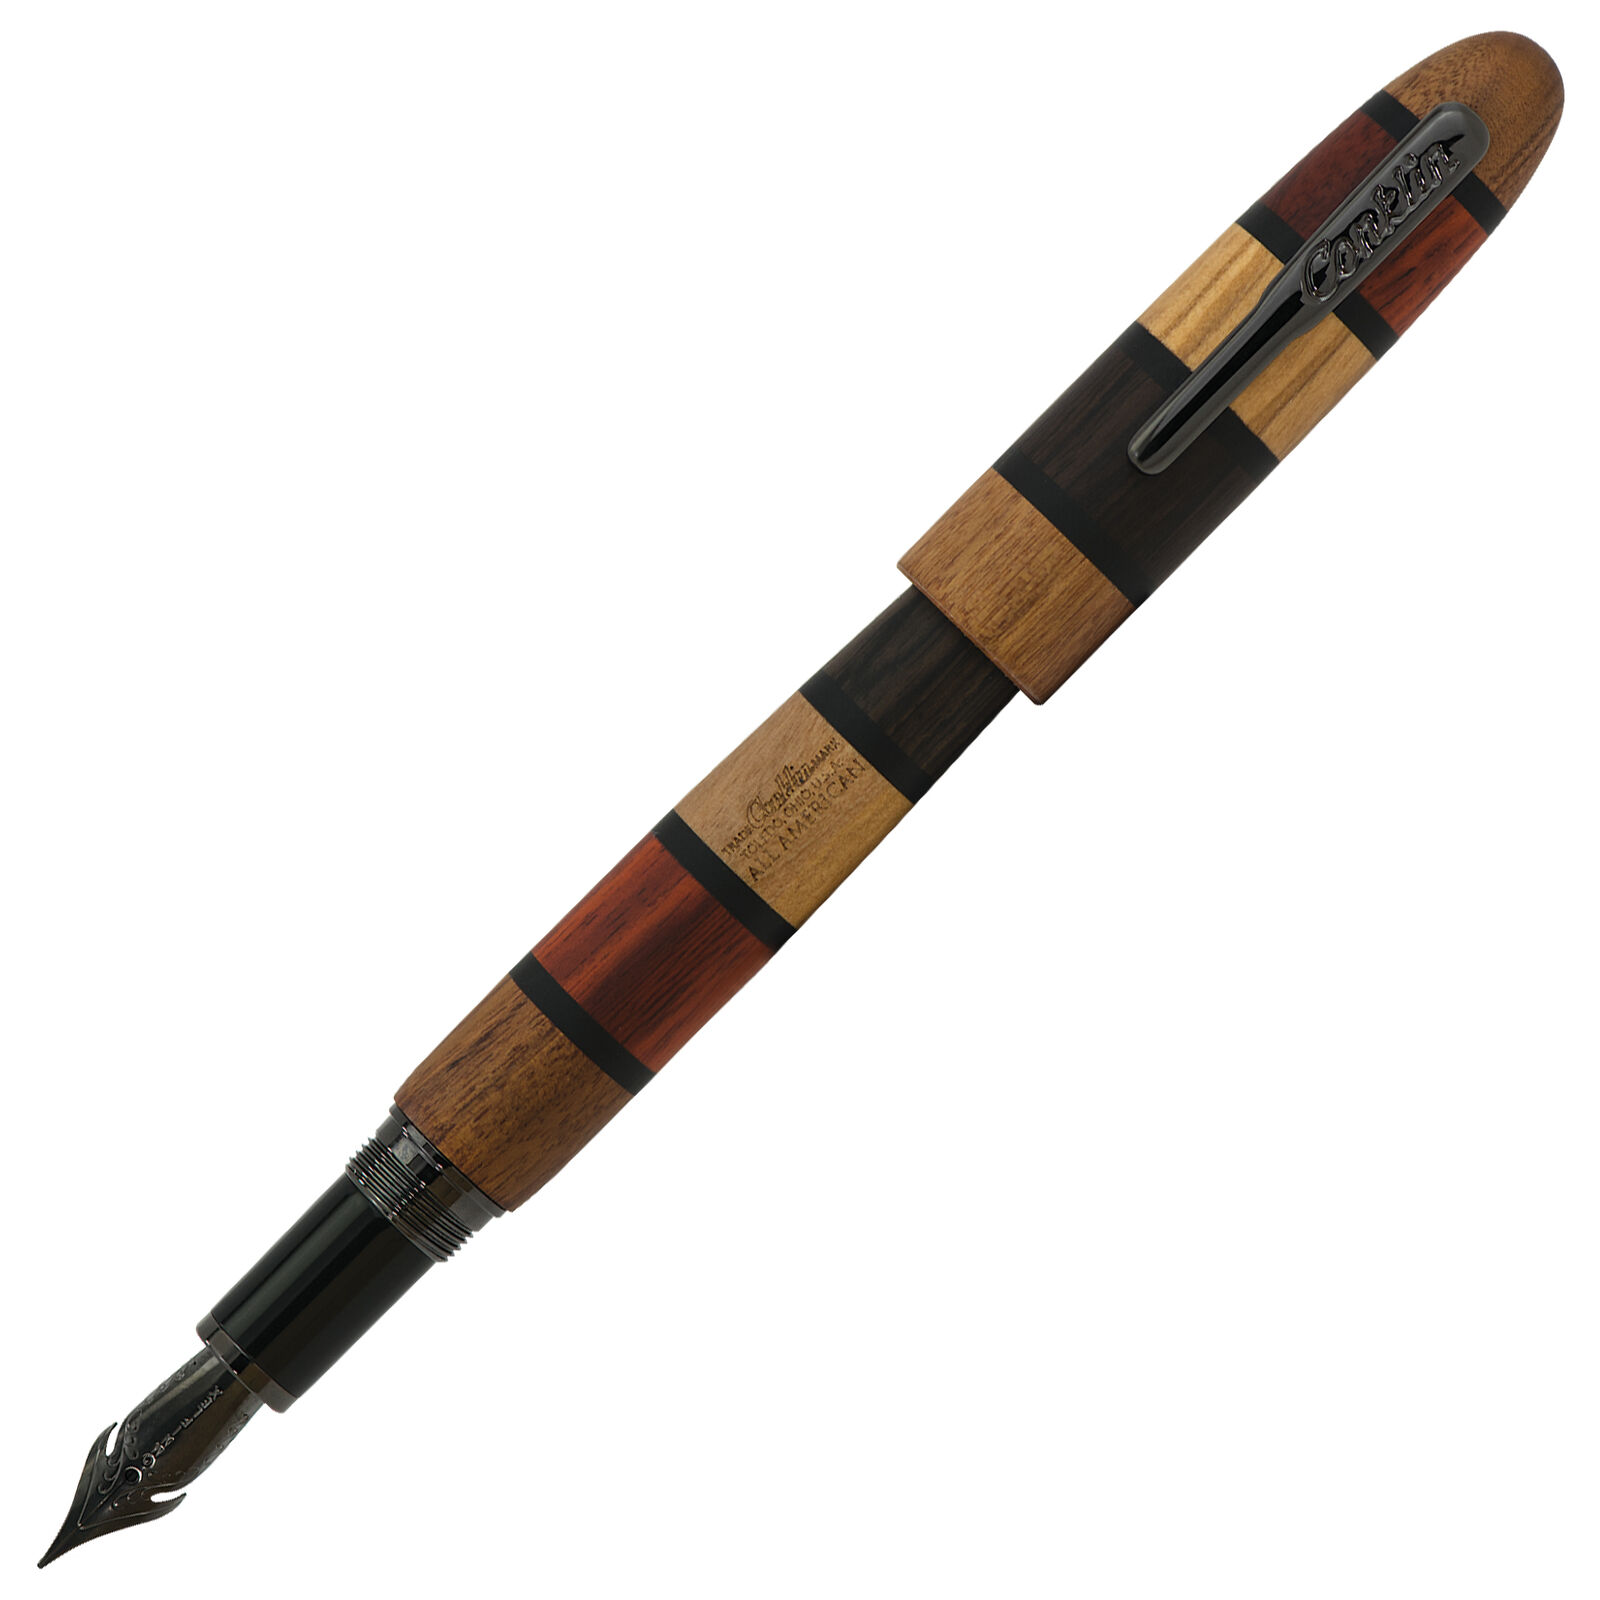 Conklin All American Fountain Pen in Quad Wood - 1.5mm Stub Nib - NEW in Box